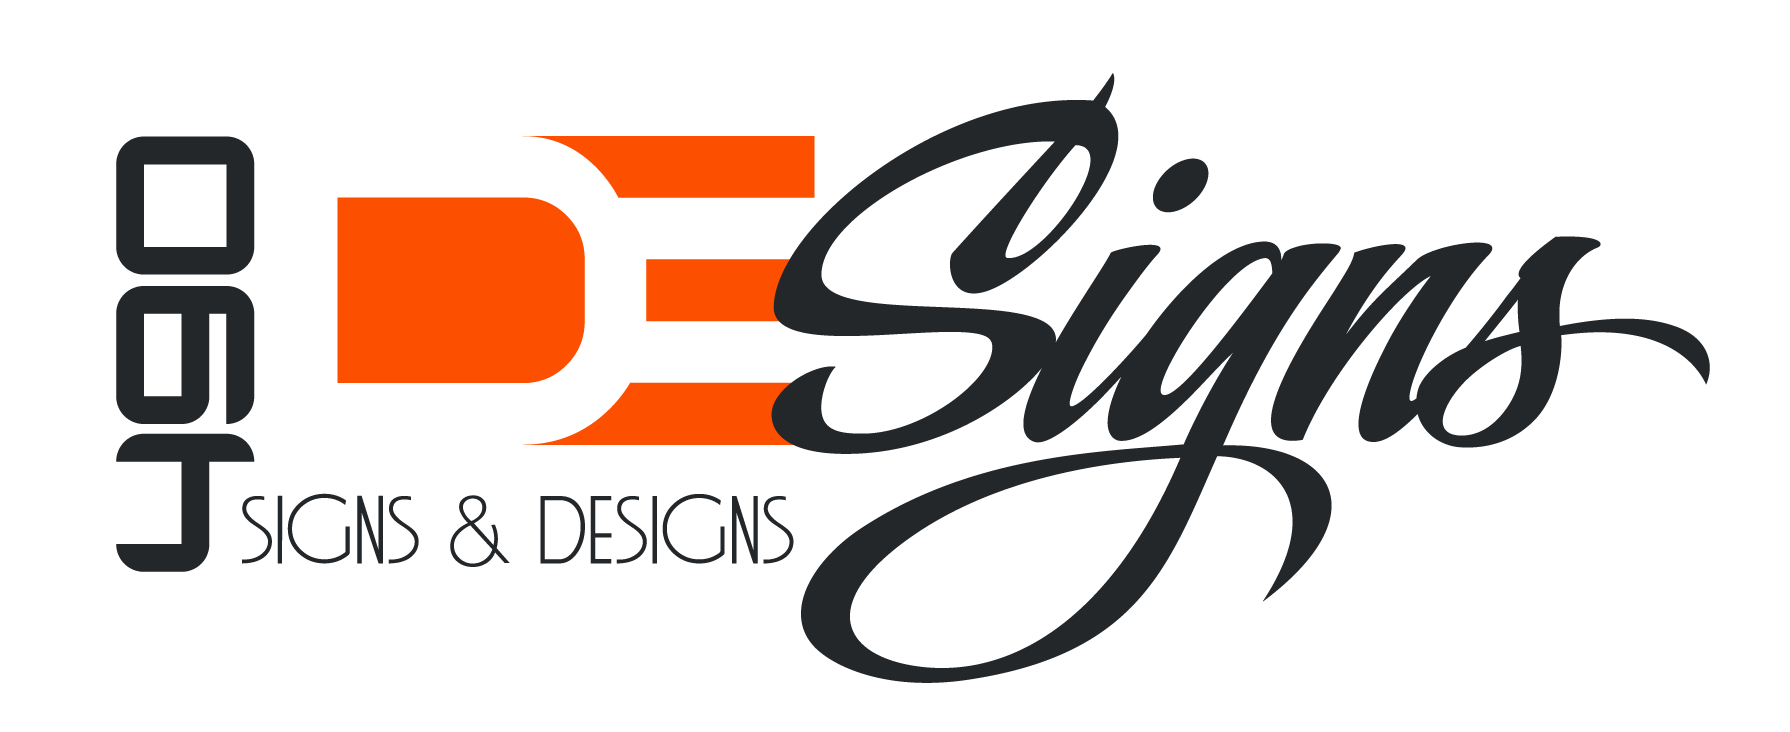 490 Signs & Designs logo